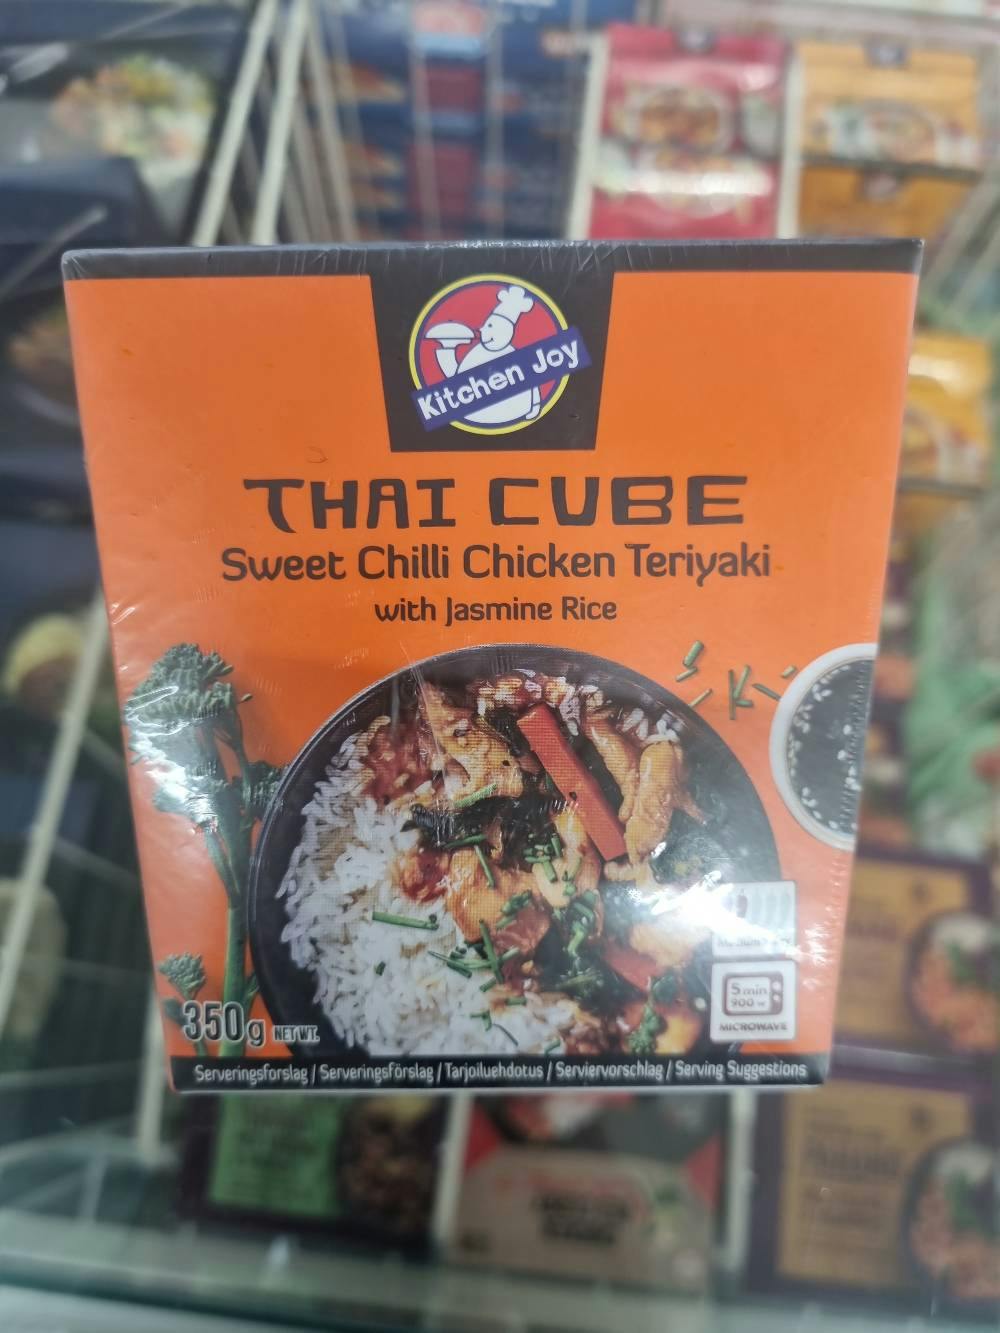 Thai cube, Kitchen Joy | Noba